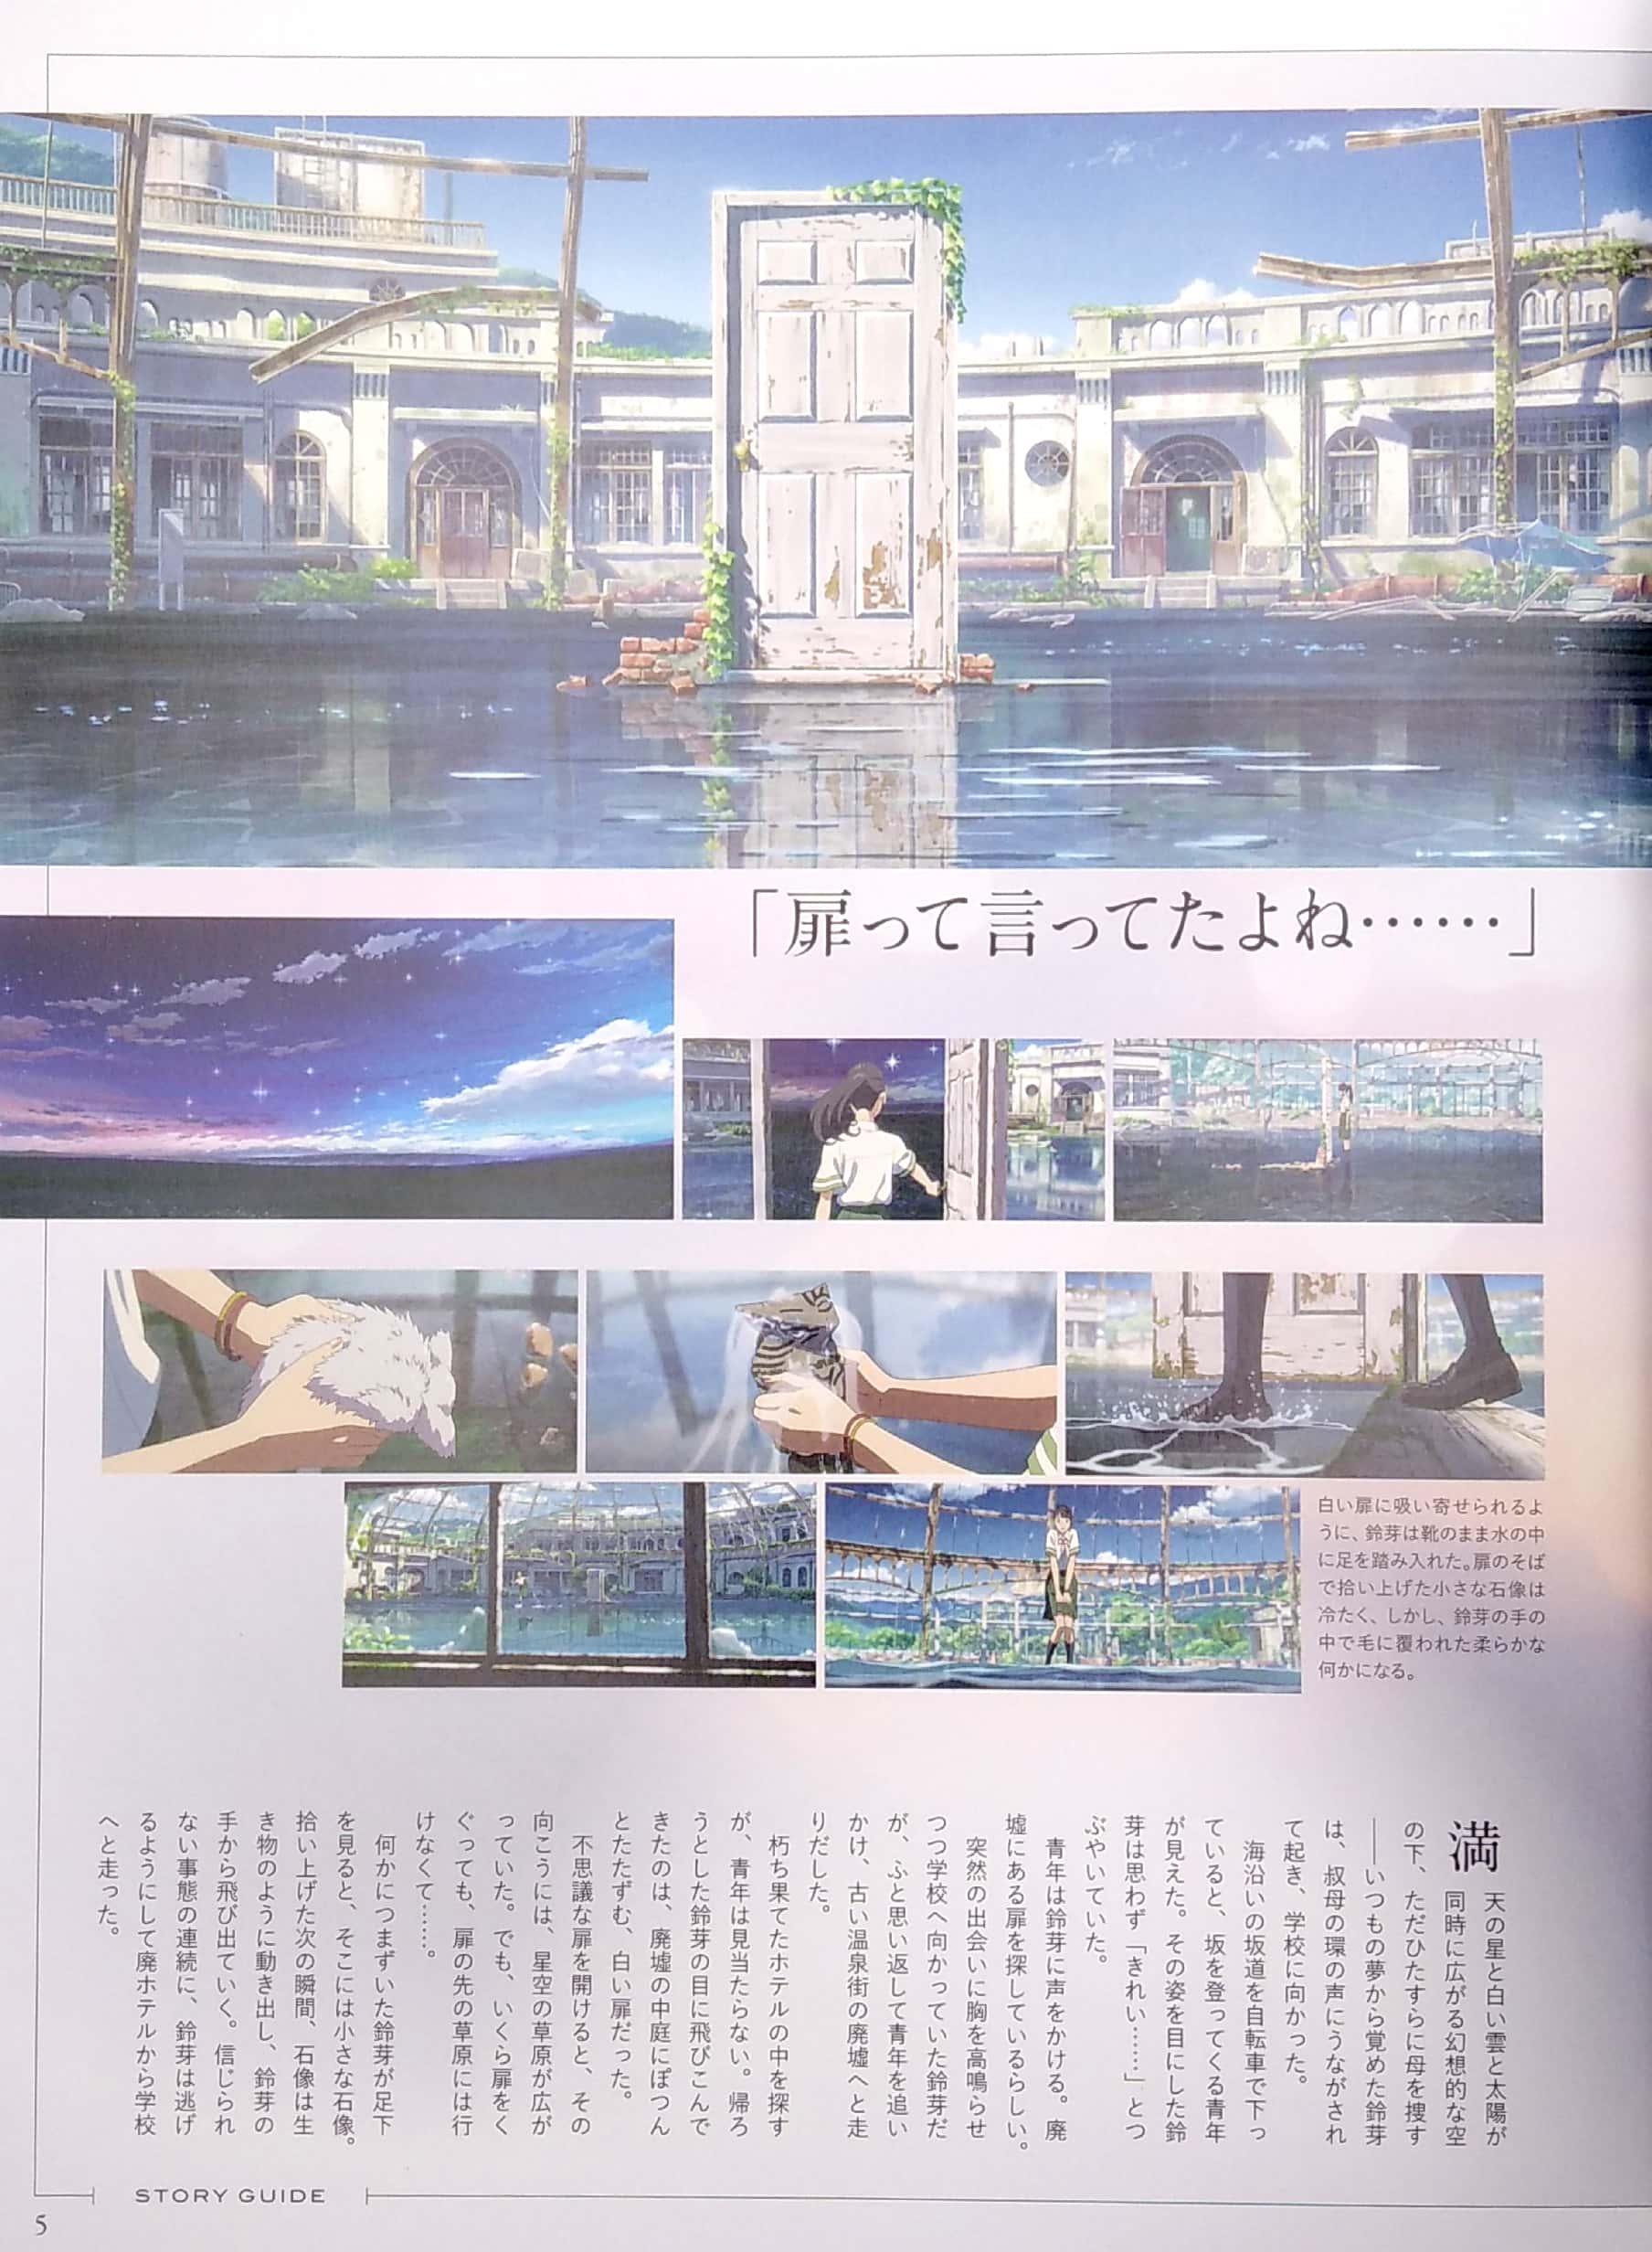 Suzume No Tojimari Official Visual Guide (Japanese Edition)